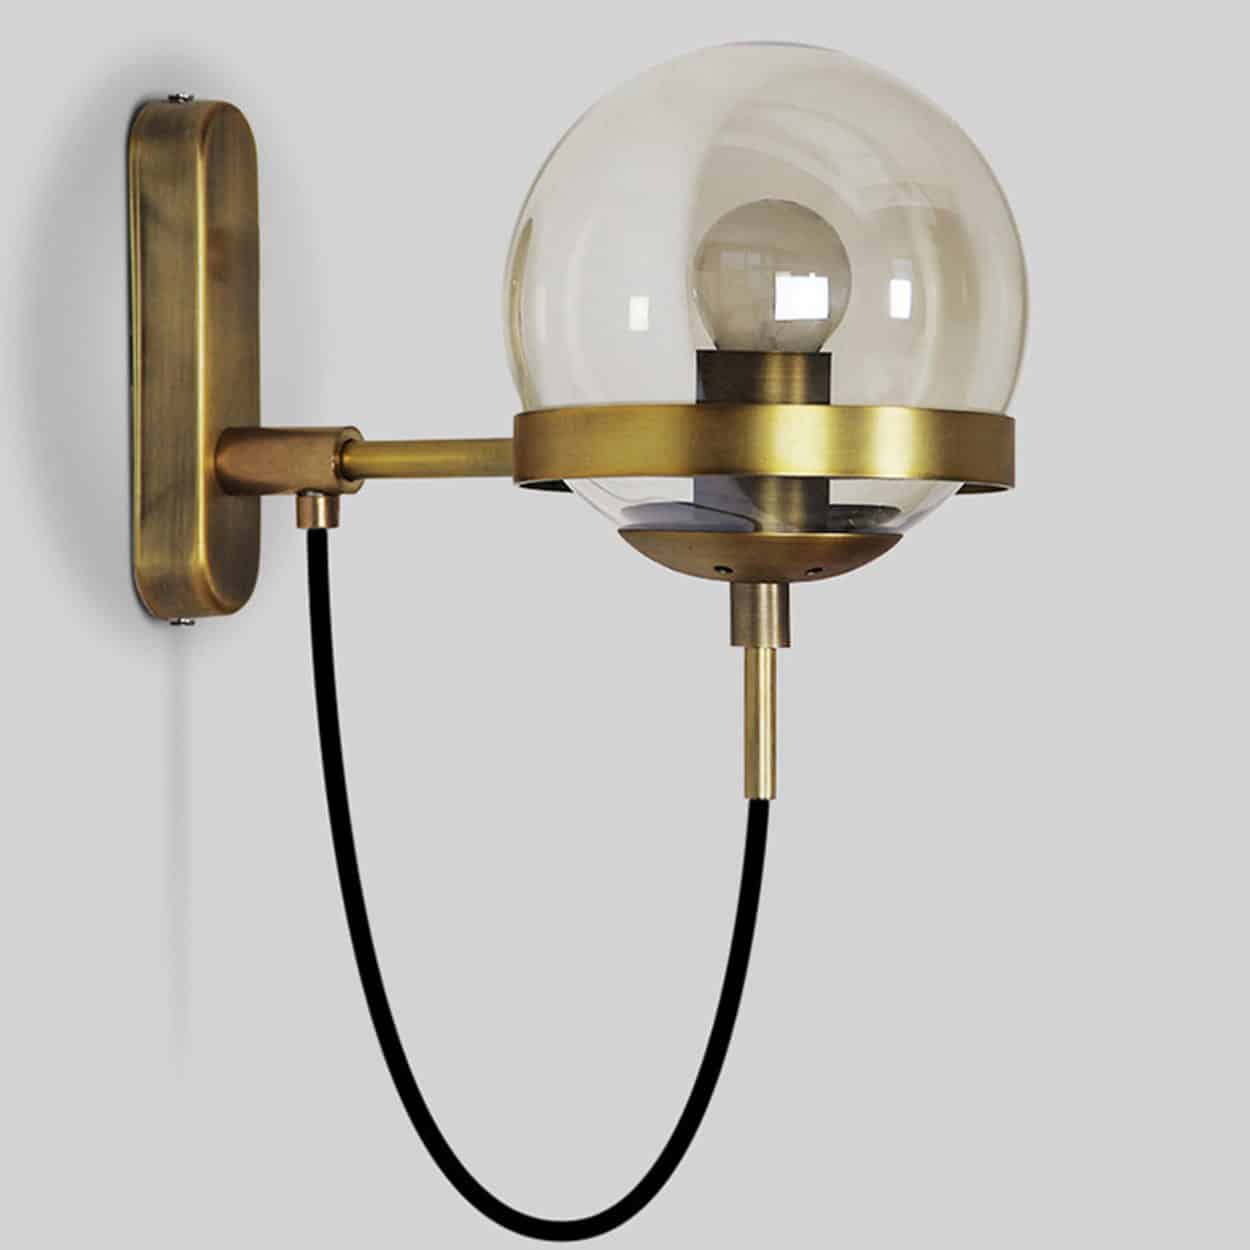 DORIT Vintage Globe Wall Lamp